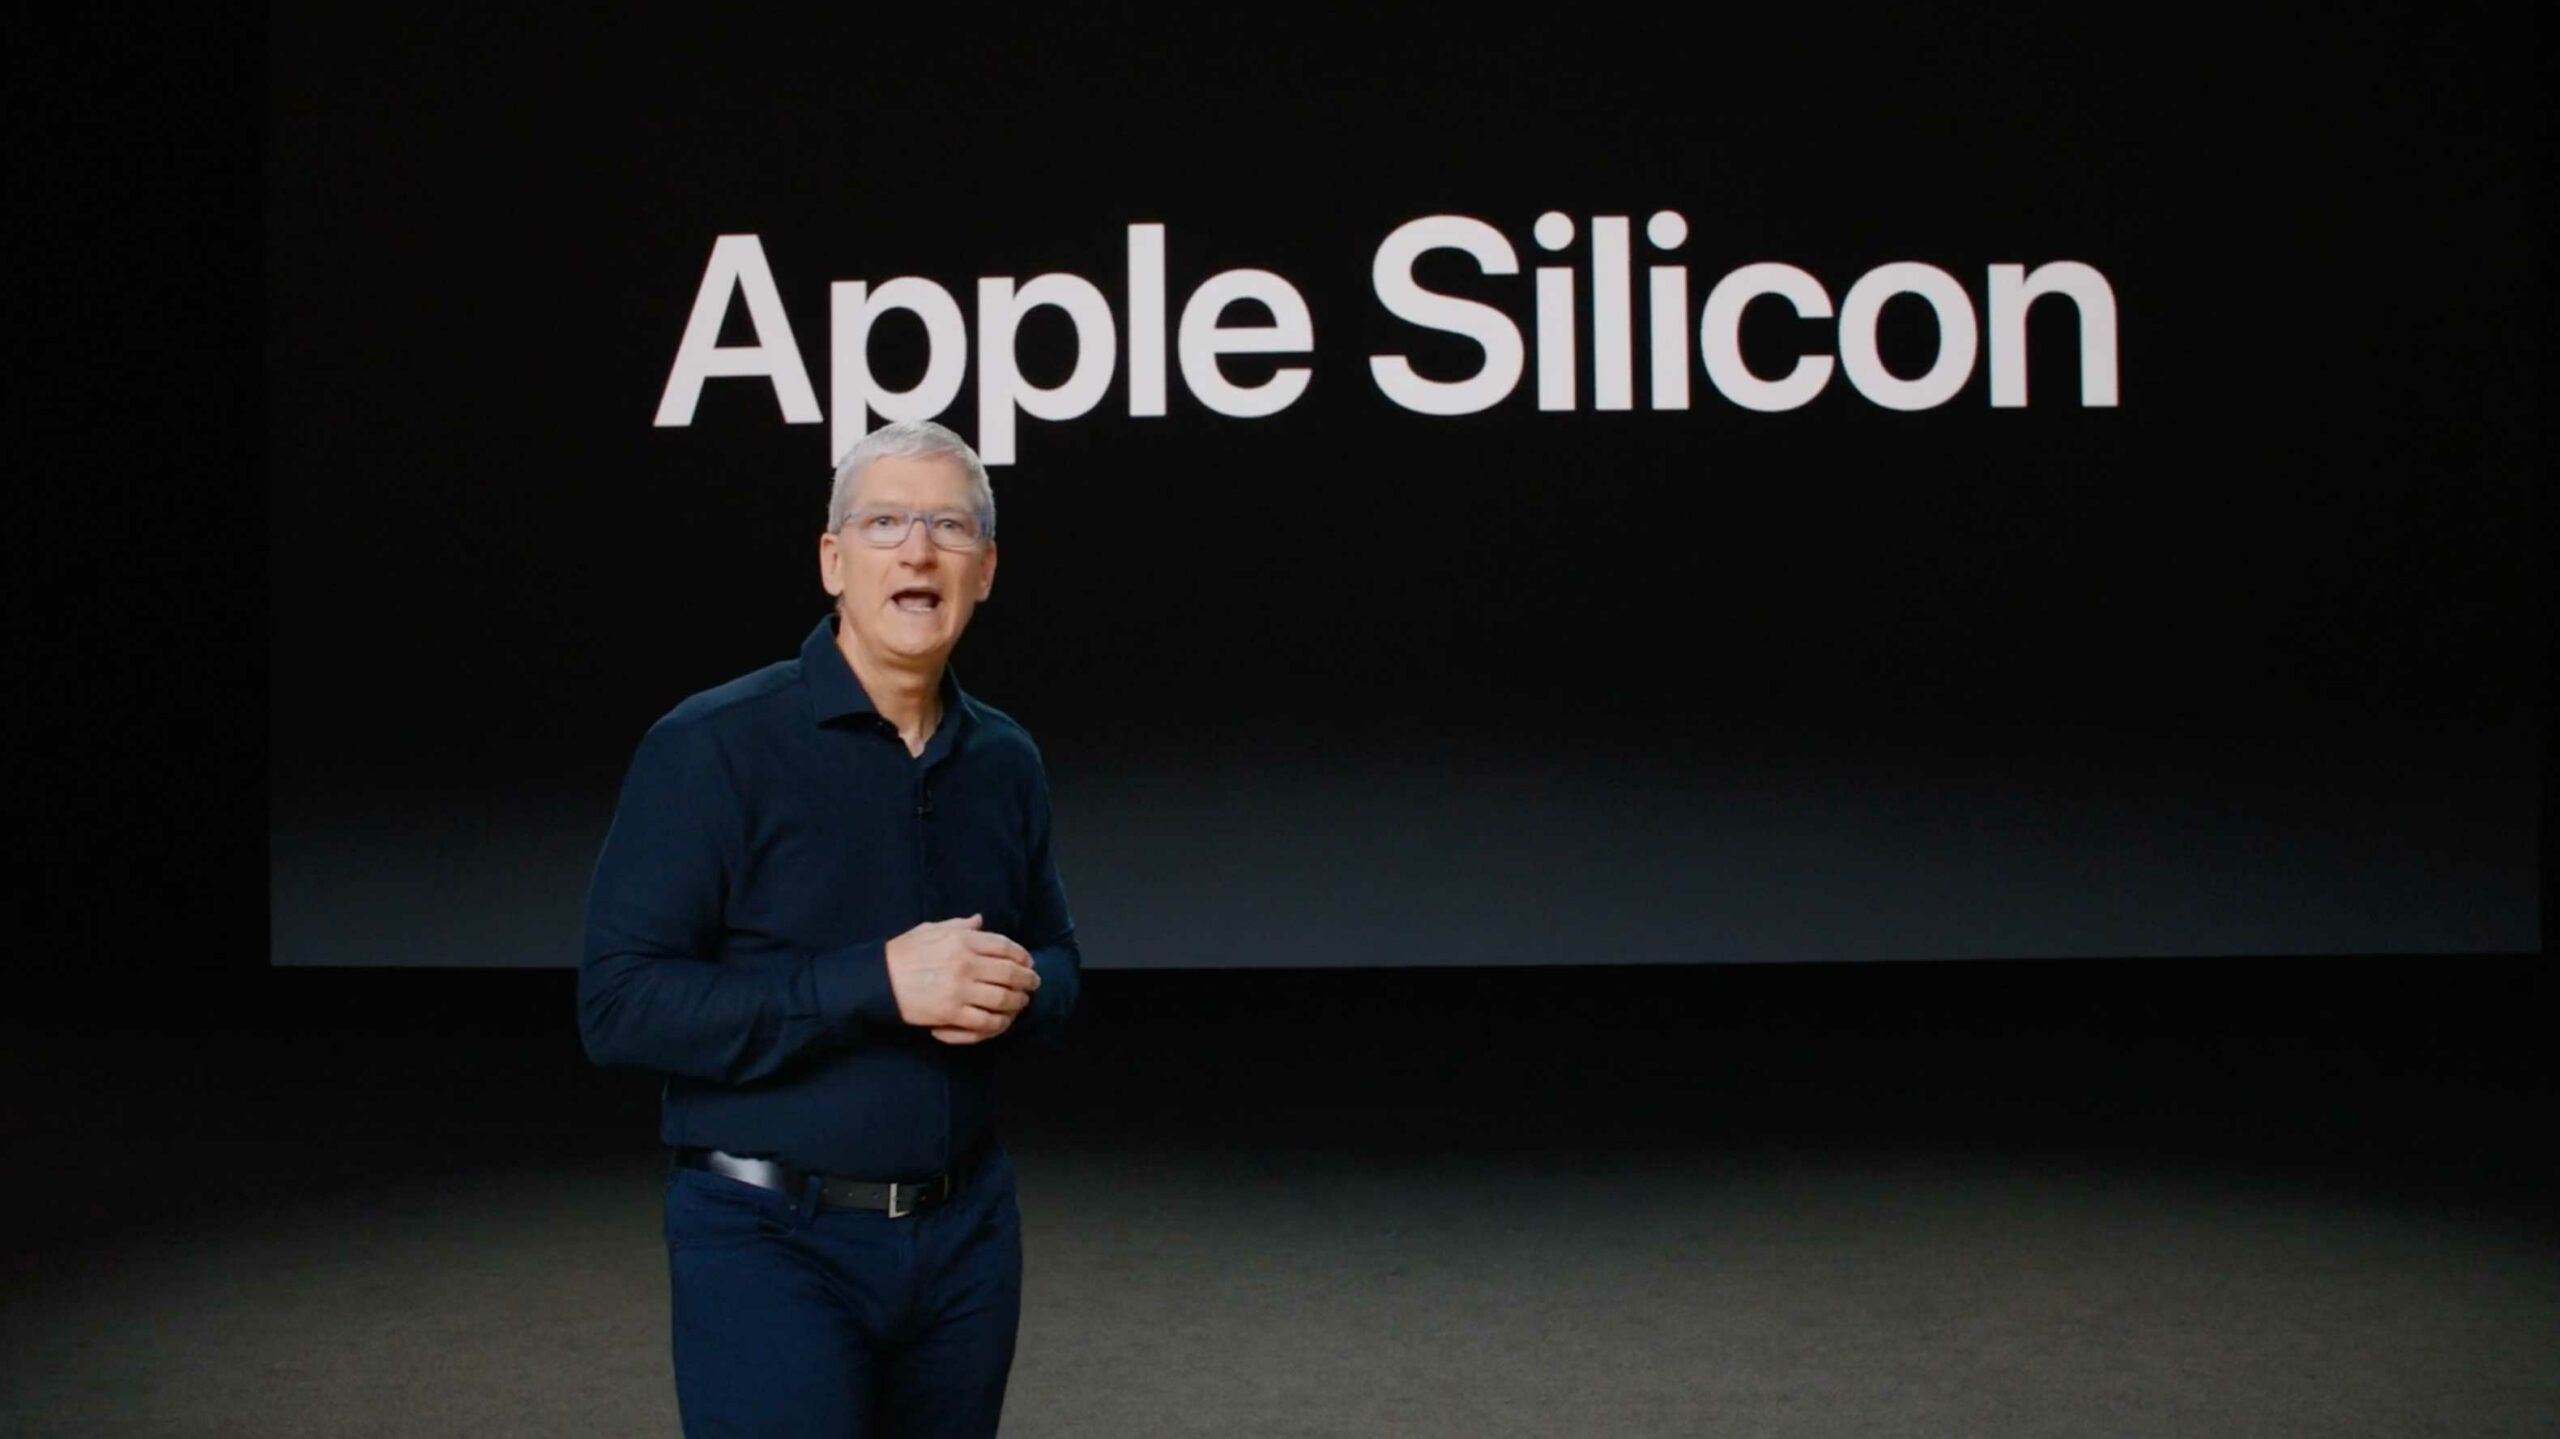 Apple silicon